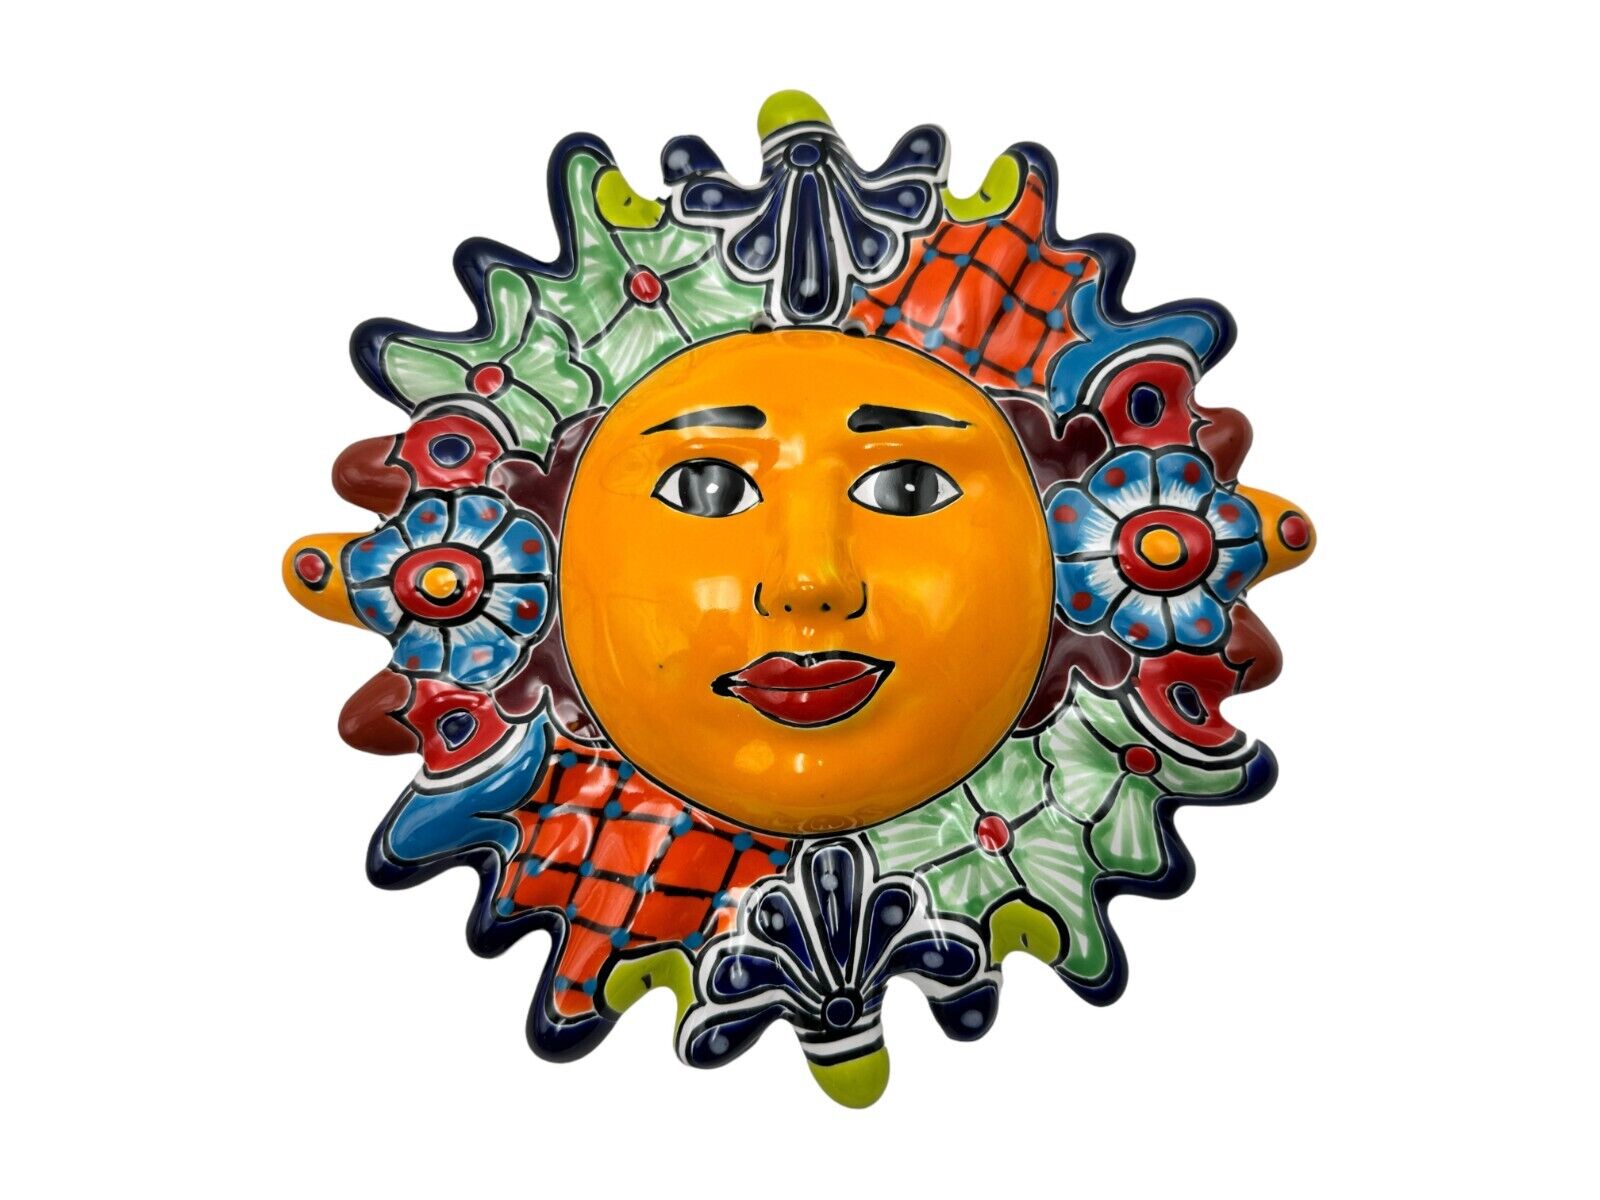 Talavera Sun Face Mexican Pottery Folk Art Hand Painted Home Decor 12